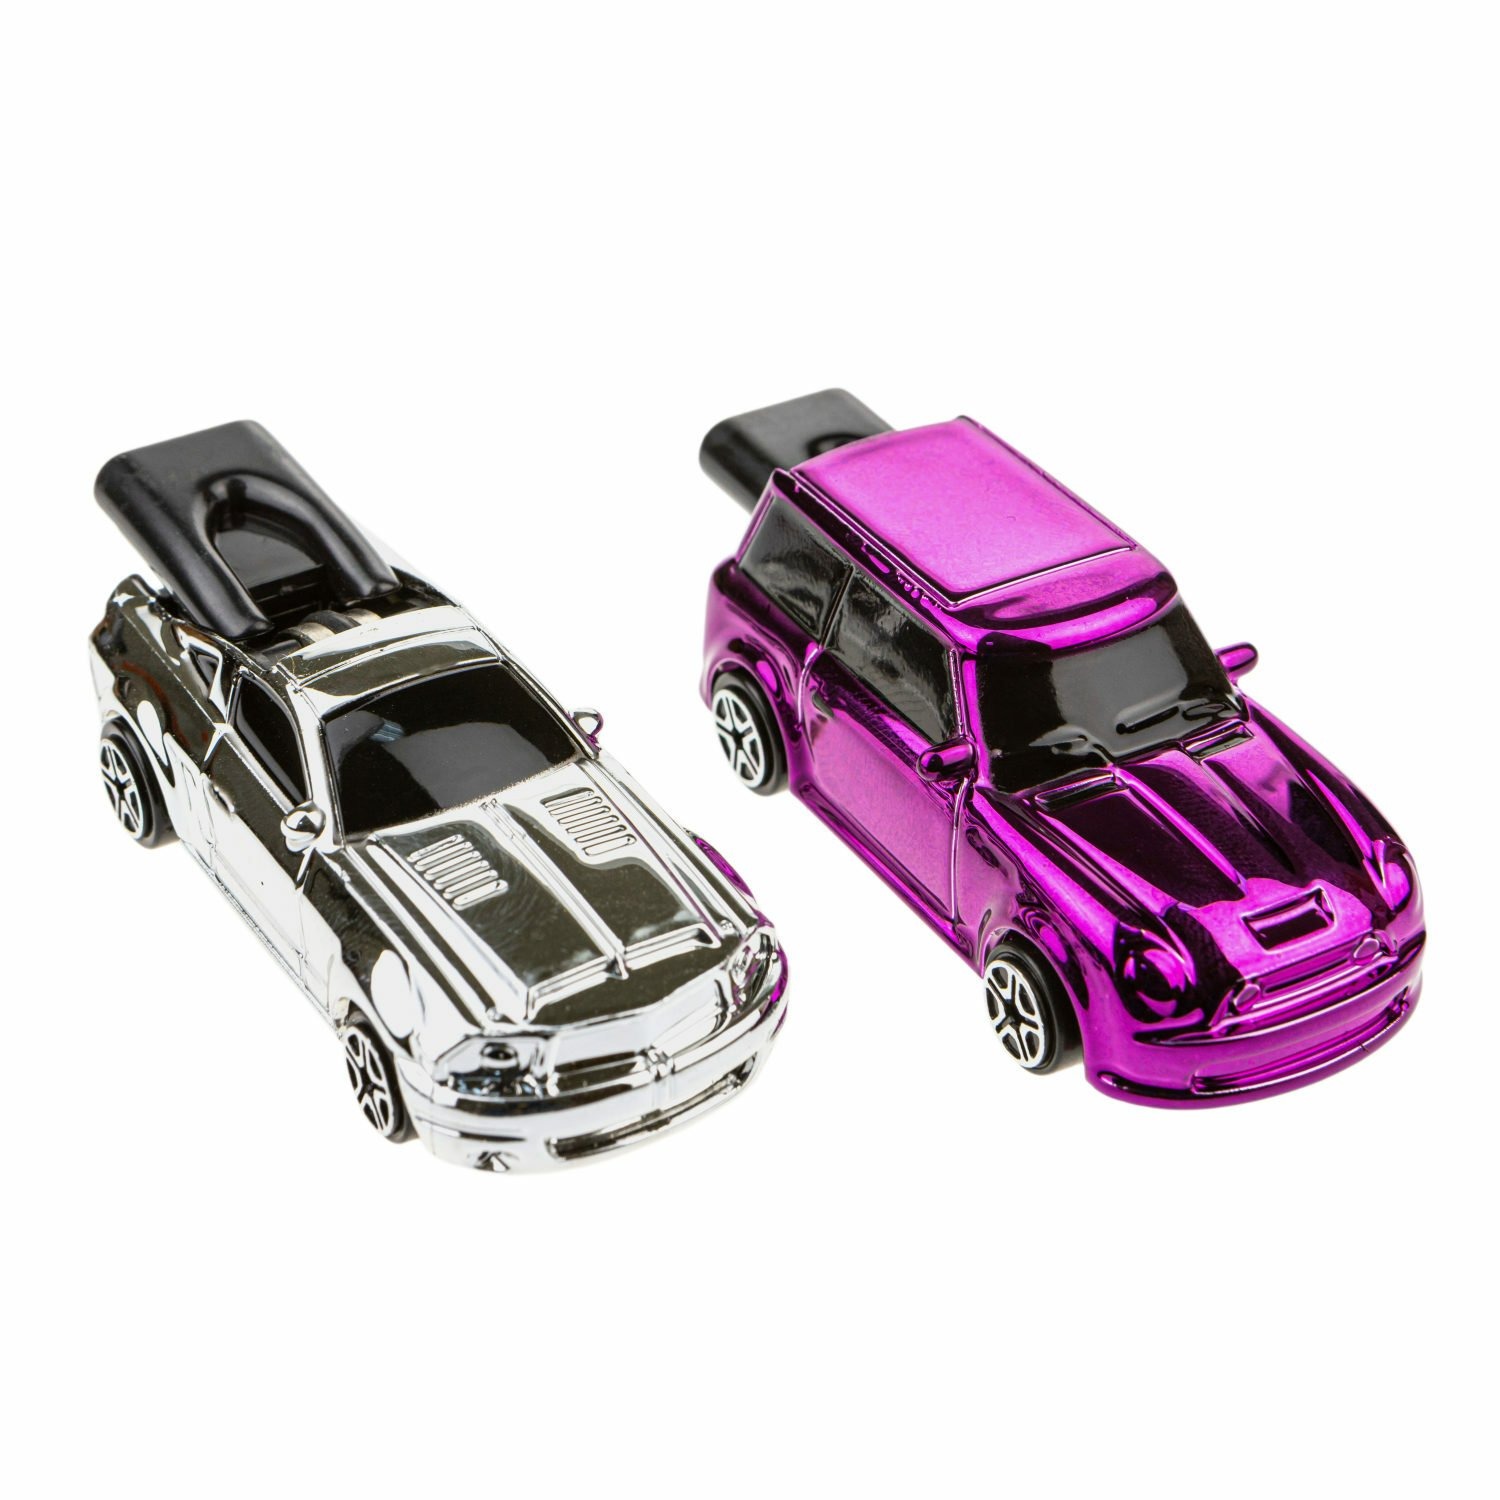 Машинка 1toy Свист-авто металлик+розовая 8 см * 2 шт., ассорт. Т20975-1